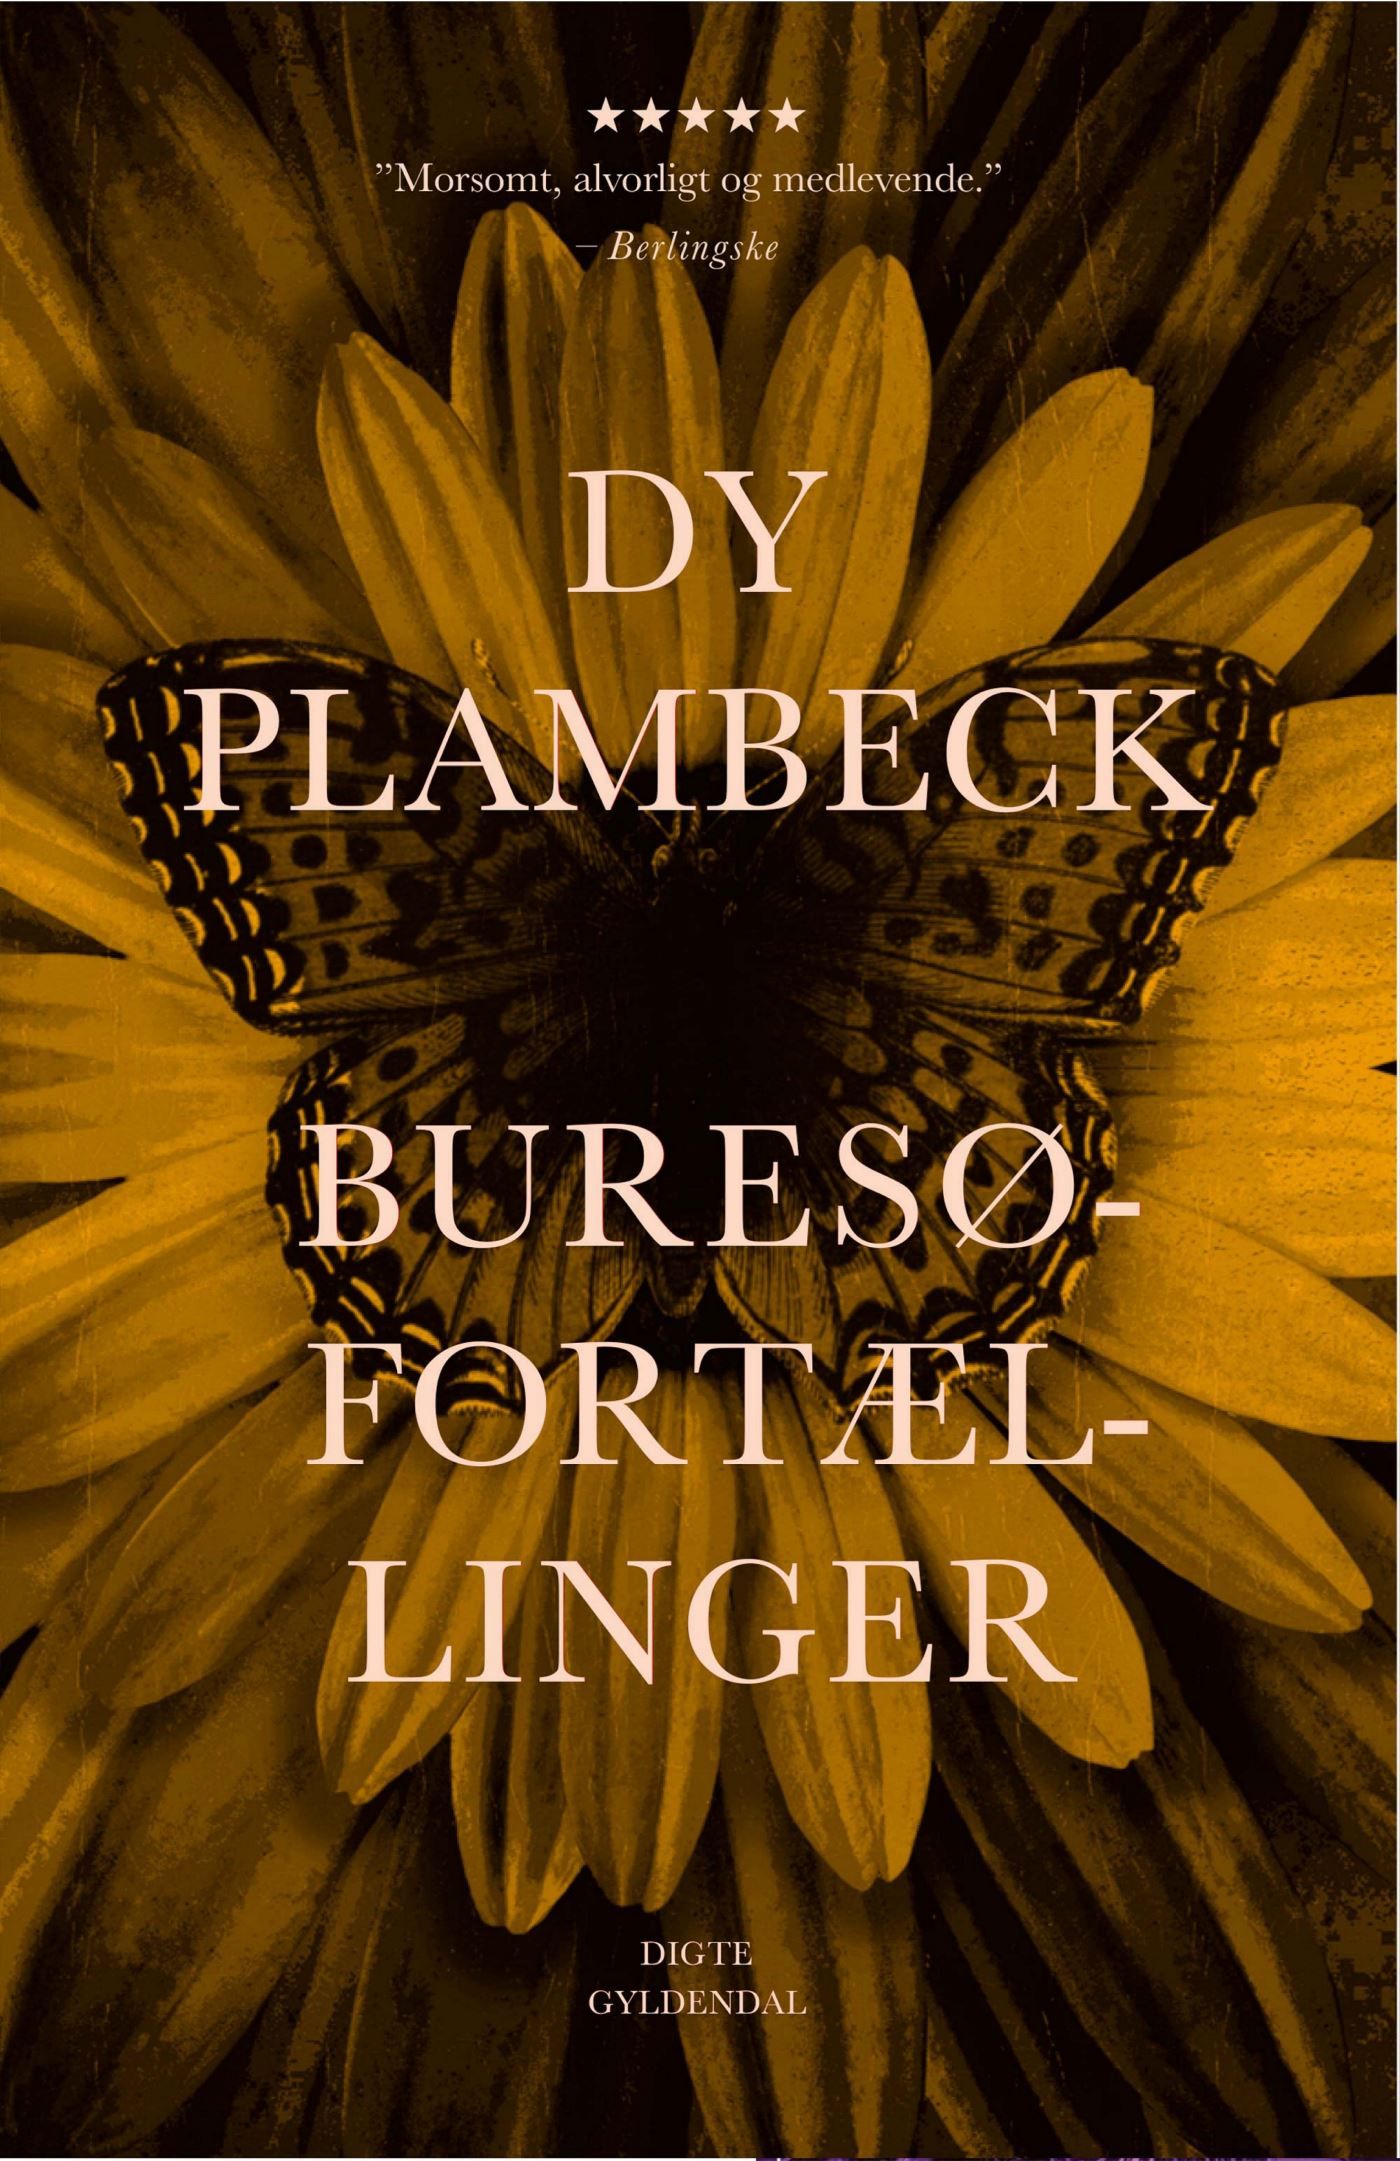 Buresø-fortællinger, ljudbok av Dy Plambeck